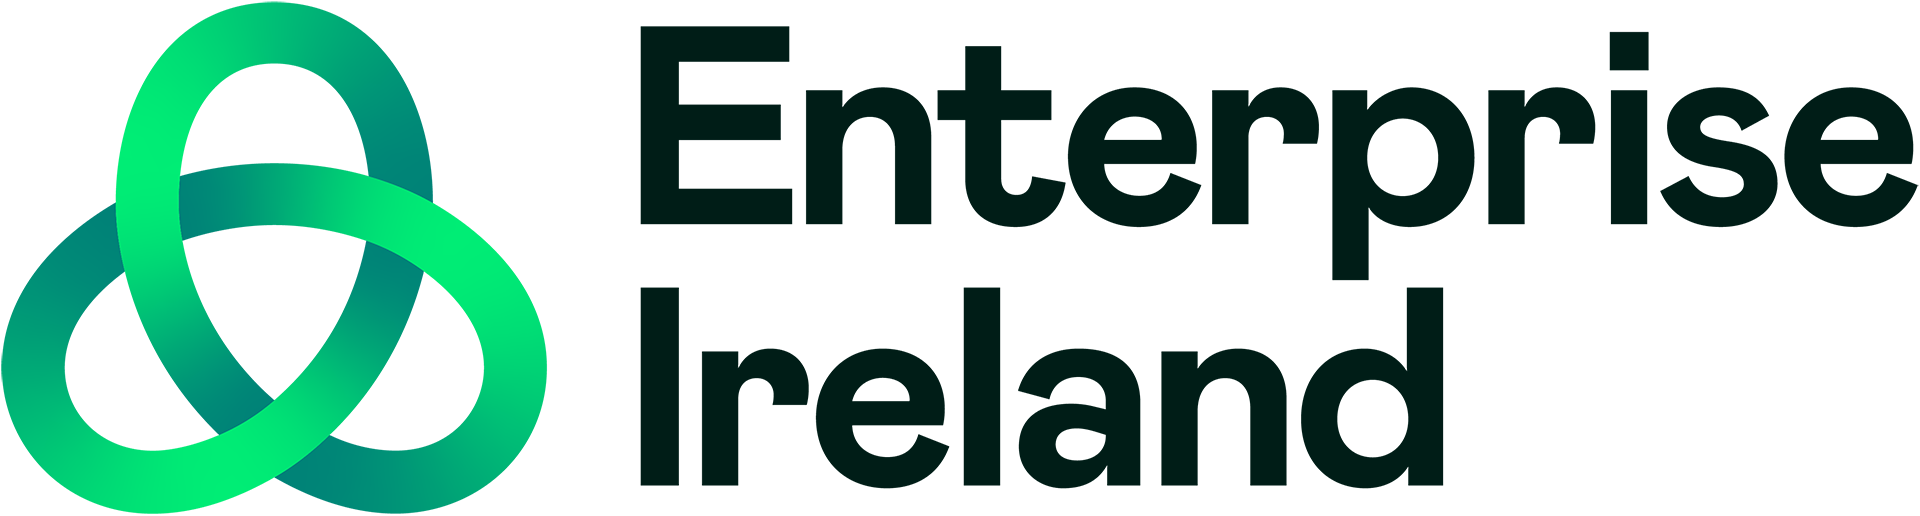 Enterprise Ireland Logo.png